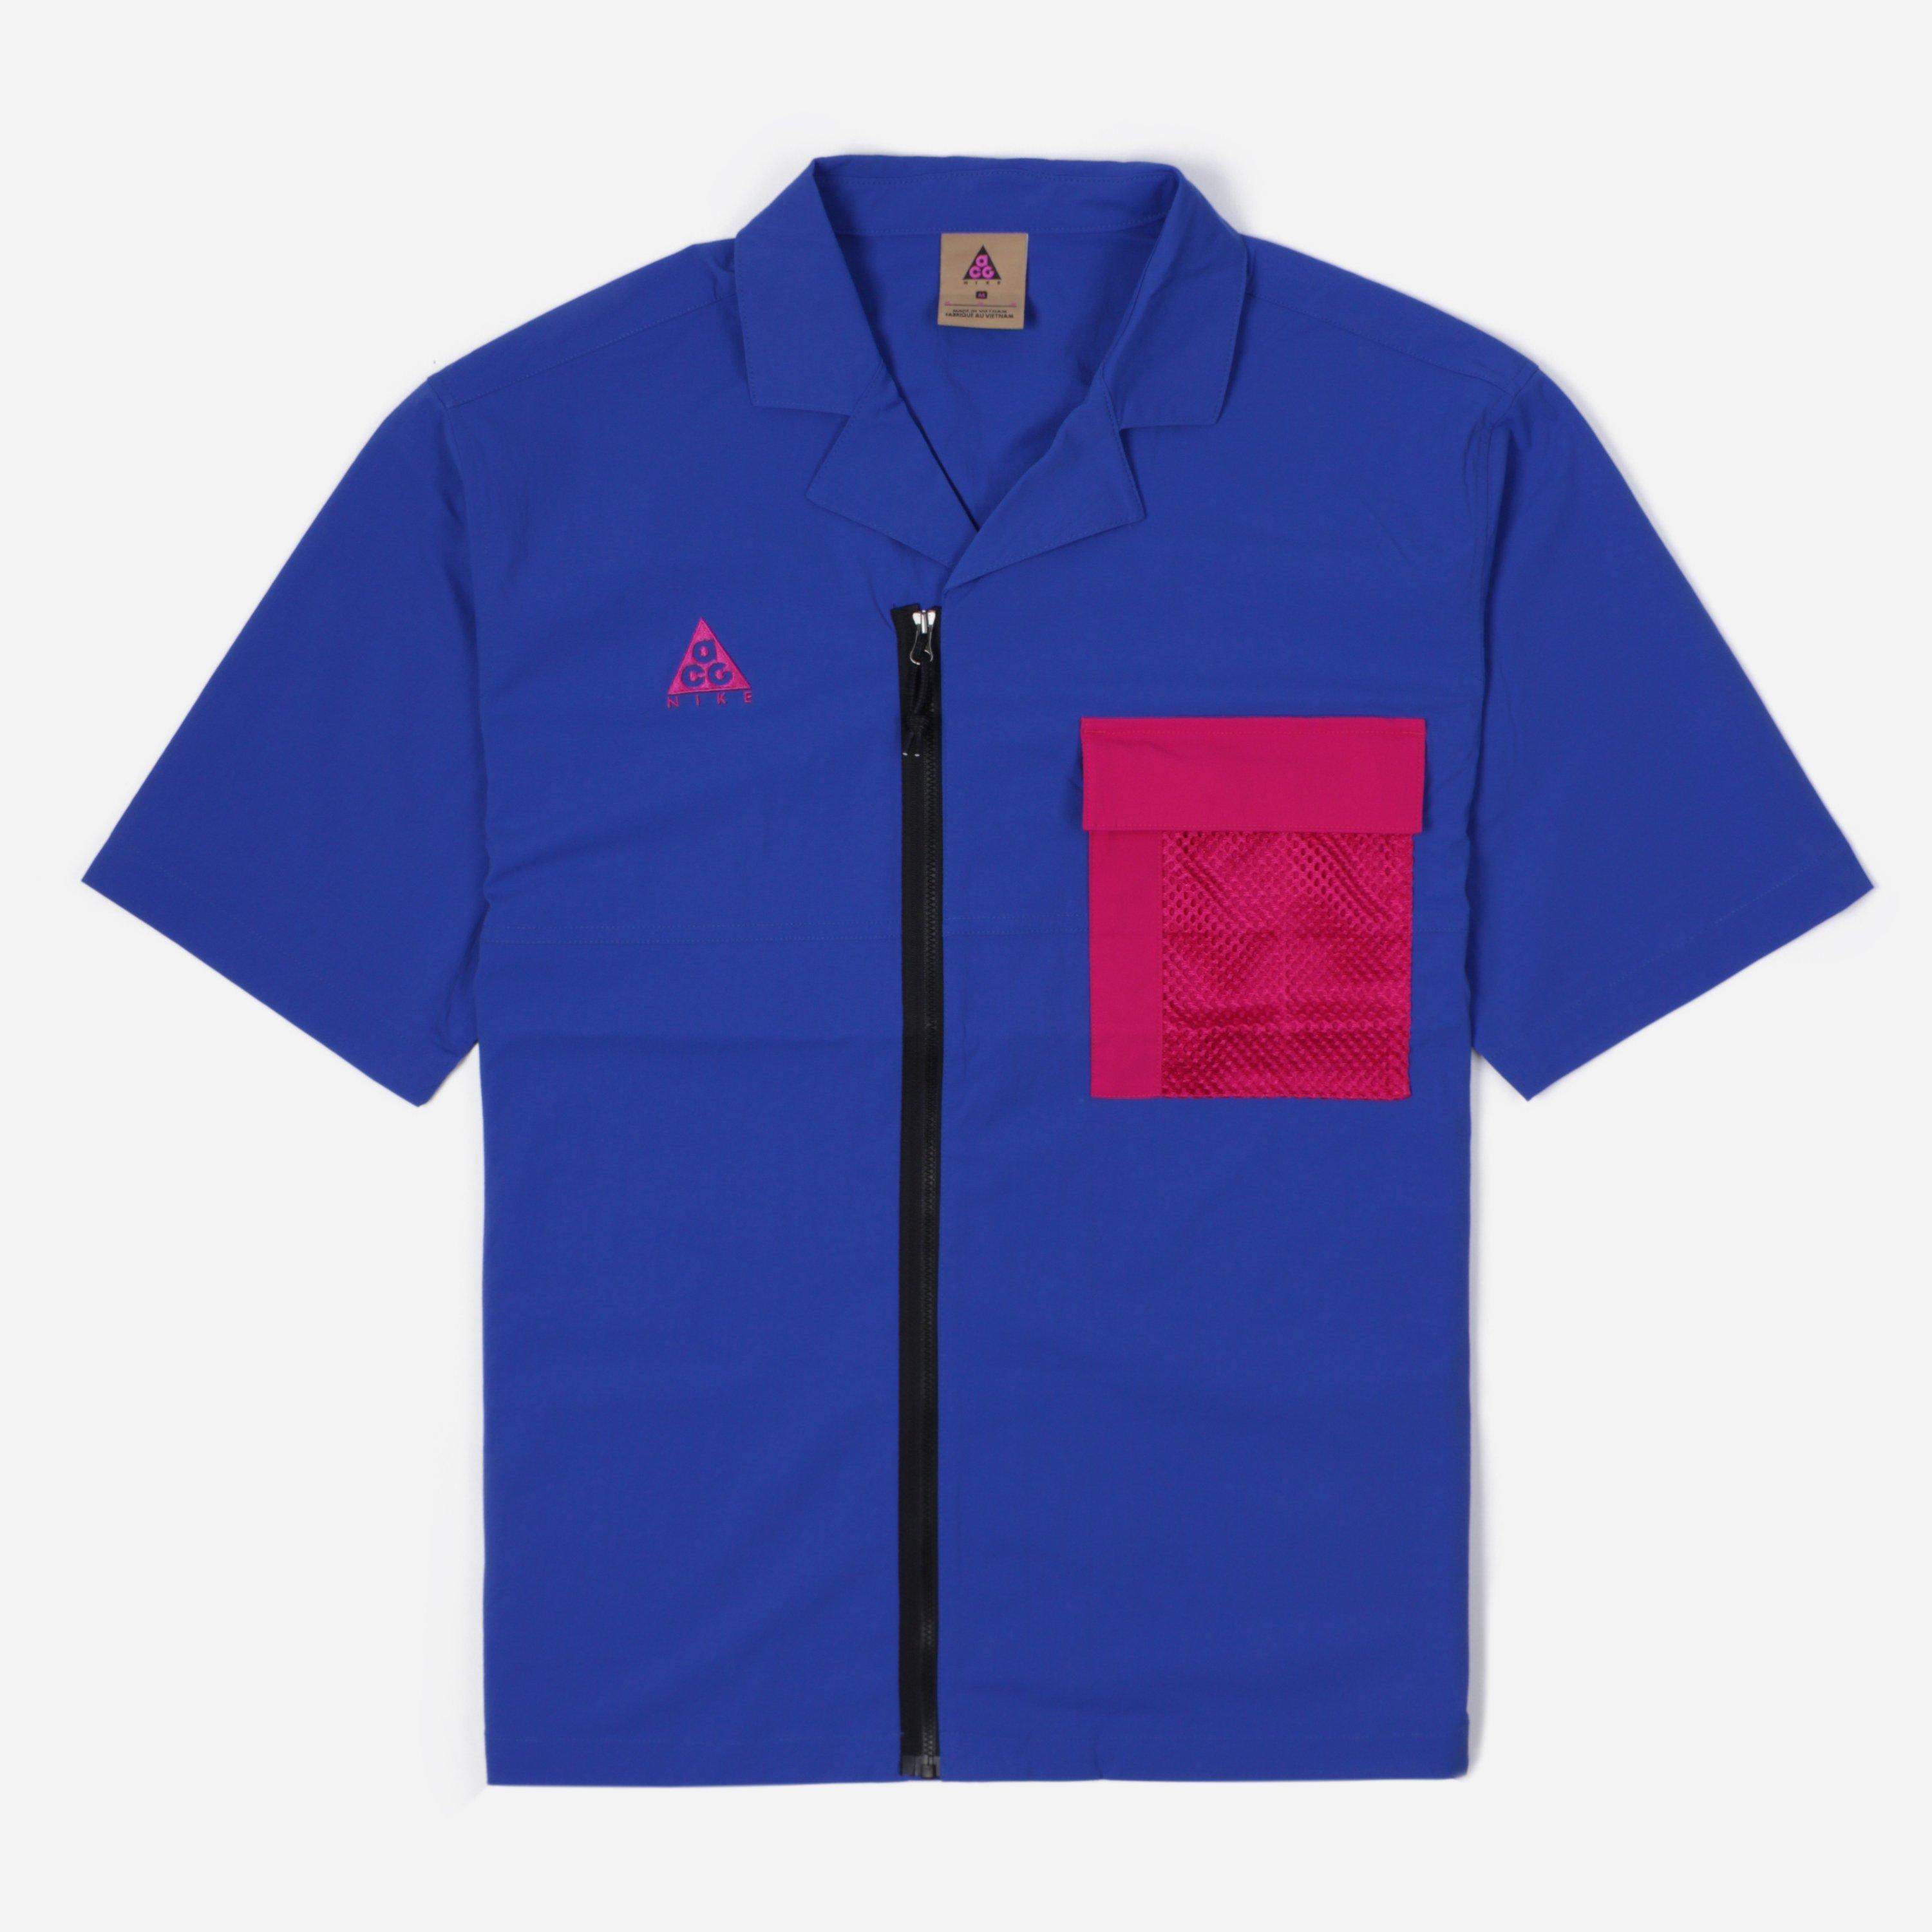 Nike Acg Zip Shirt in Purple (Blue) for 